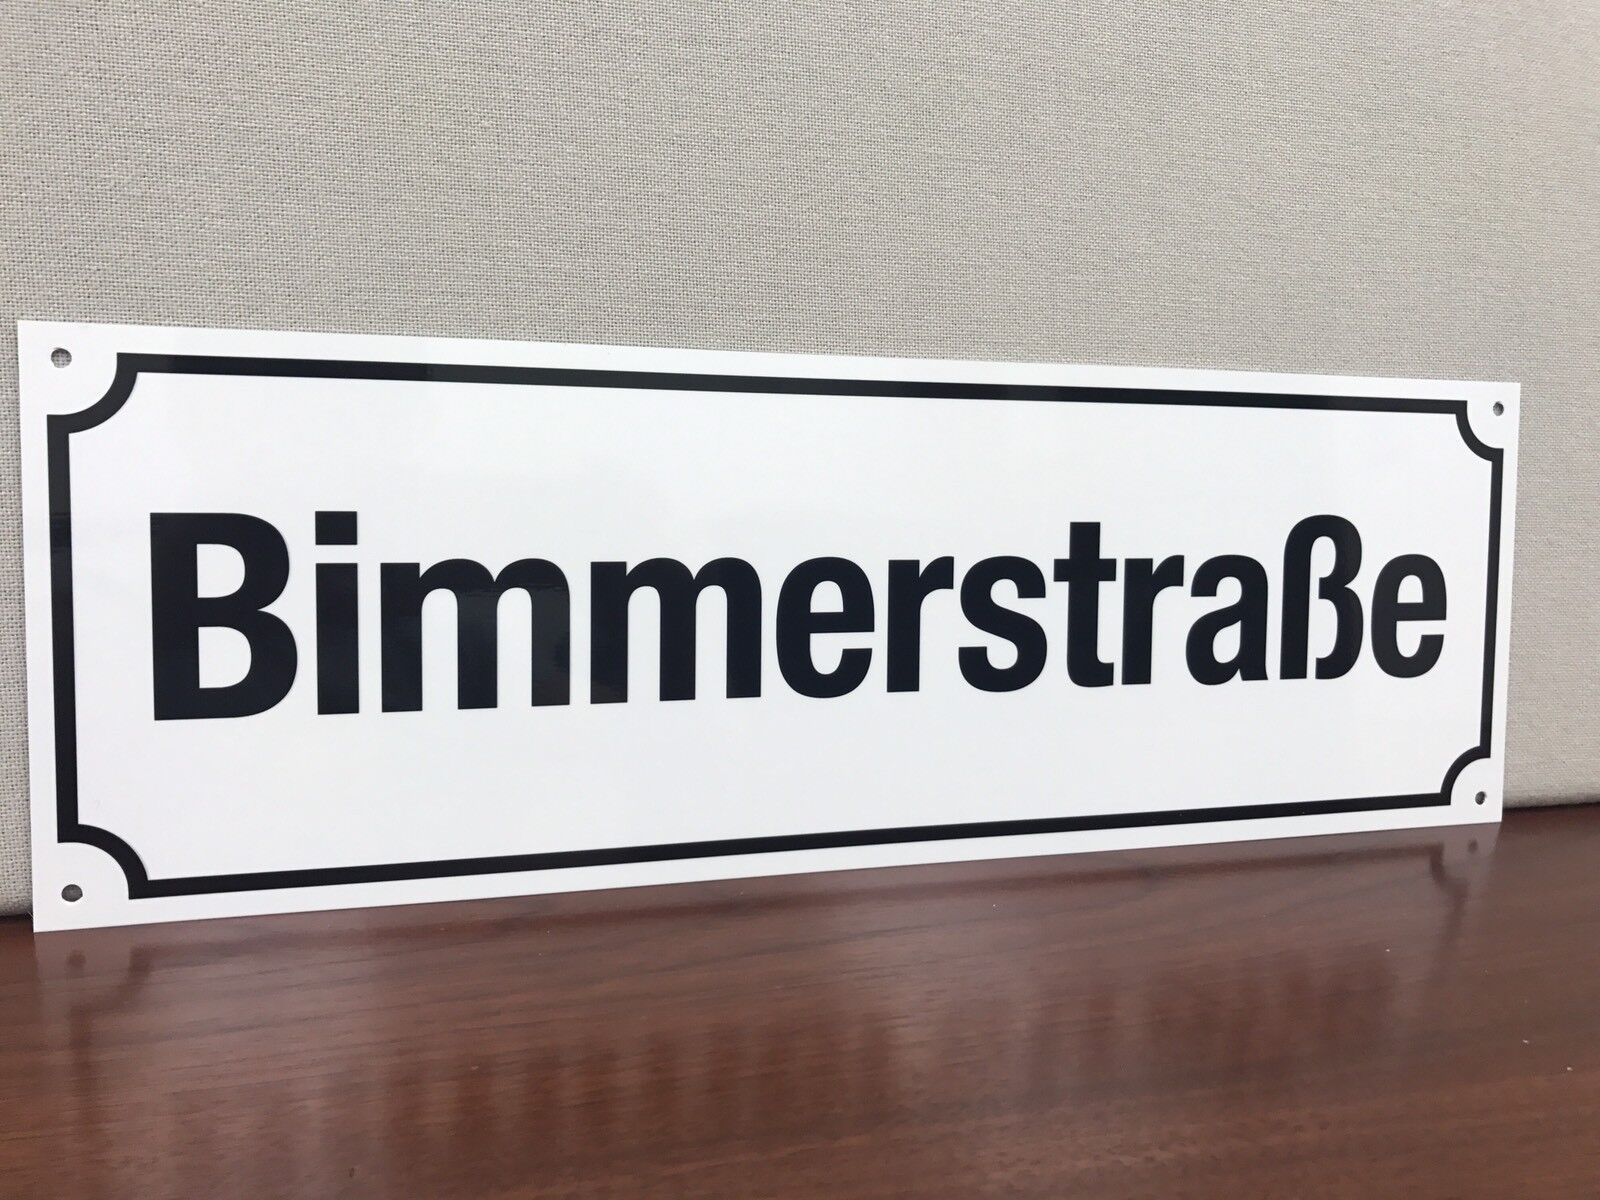 Bimmerstrasse  Bmw Bimmer metal Street sign German European